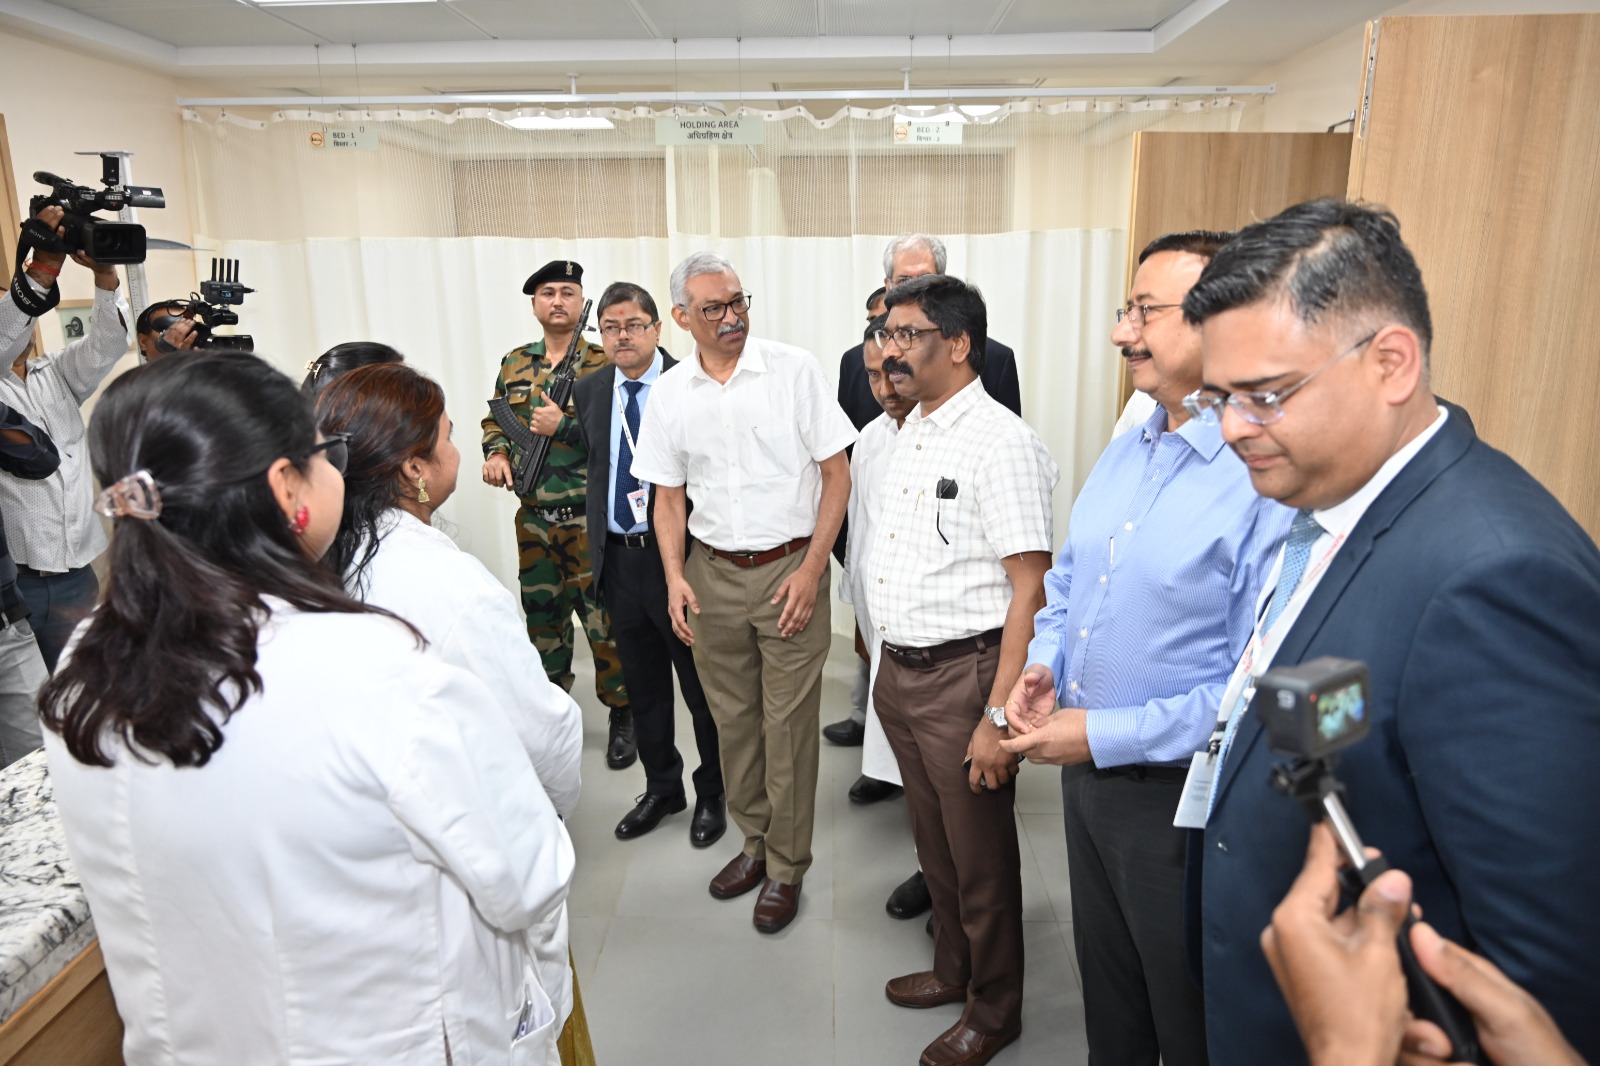 रांची कैंसर अस्पताल & रिसर्च सेंटर मील का पत्थर होगा साबित: हेमंत सोरेन-Ranchi Cancer Hospital & Research Center will prove to be a milestone: Hemant Soren
